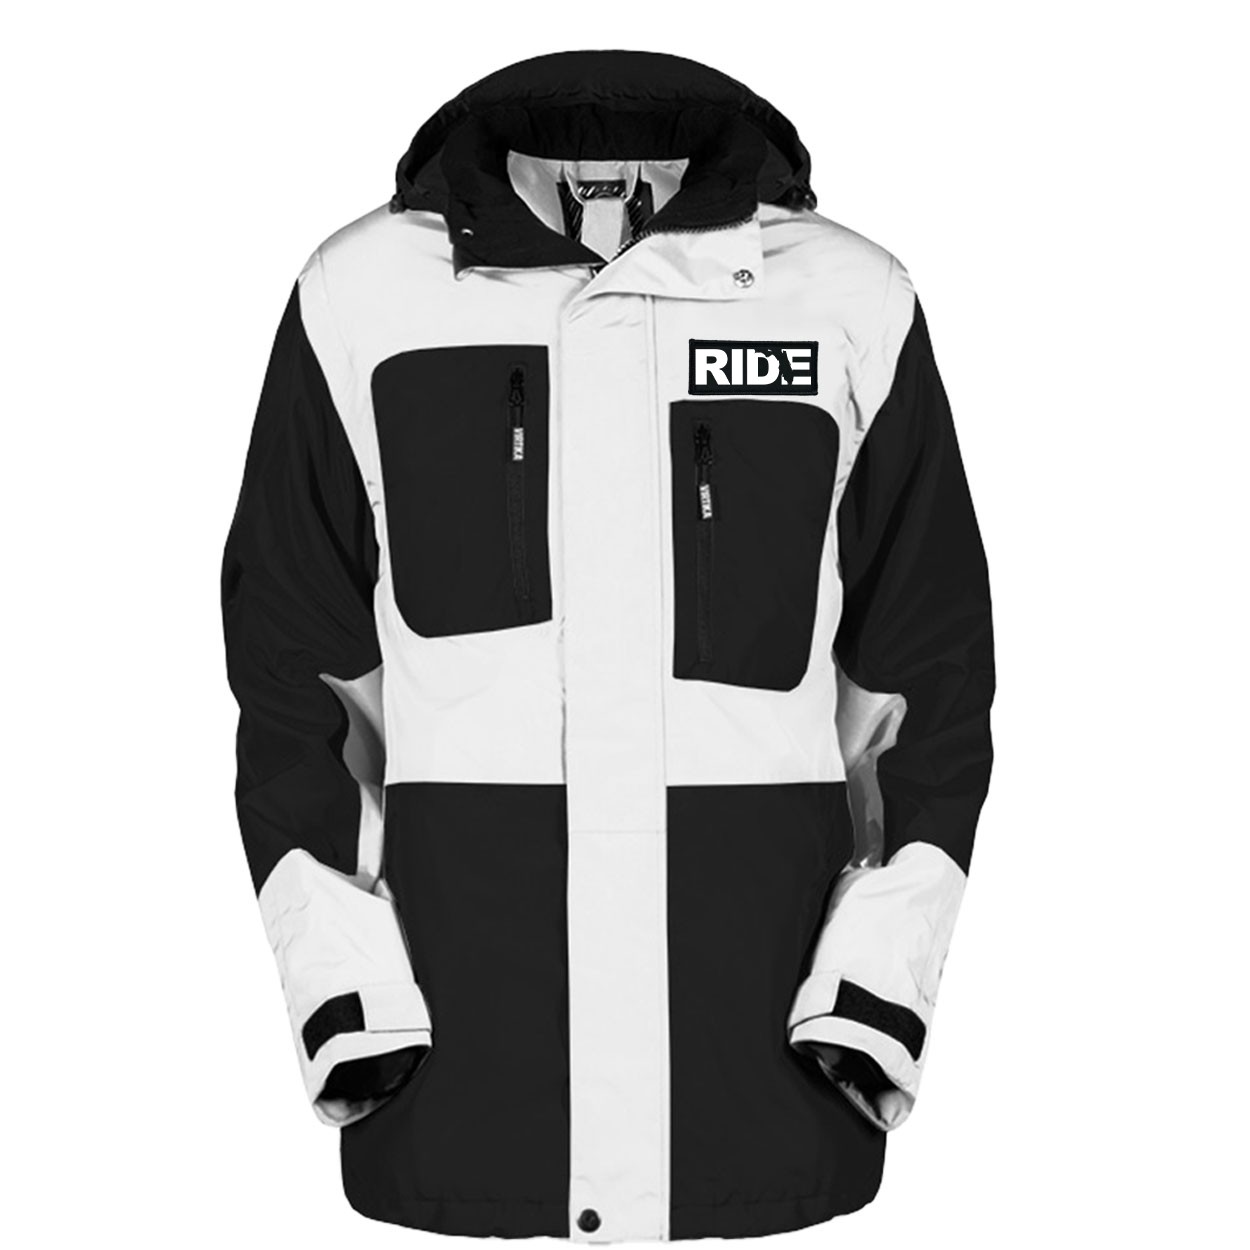 Ride Florida Pro Waterproof Breathable Winter Virtika Jacket Black/White (White Logo)